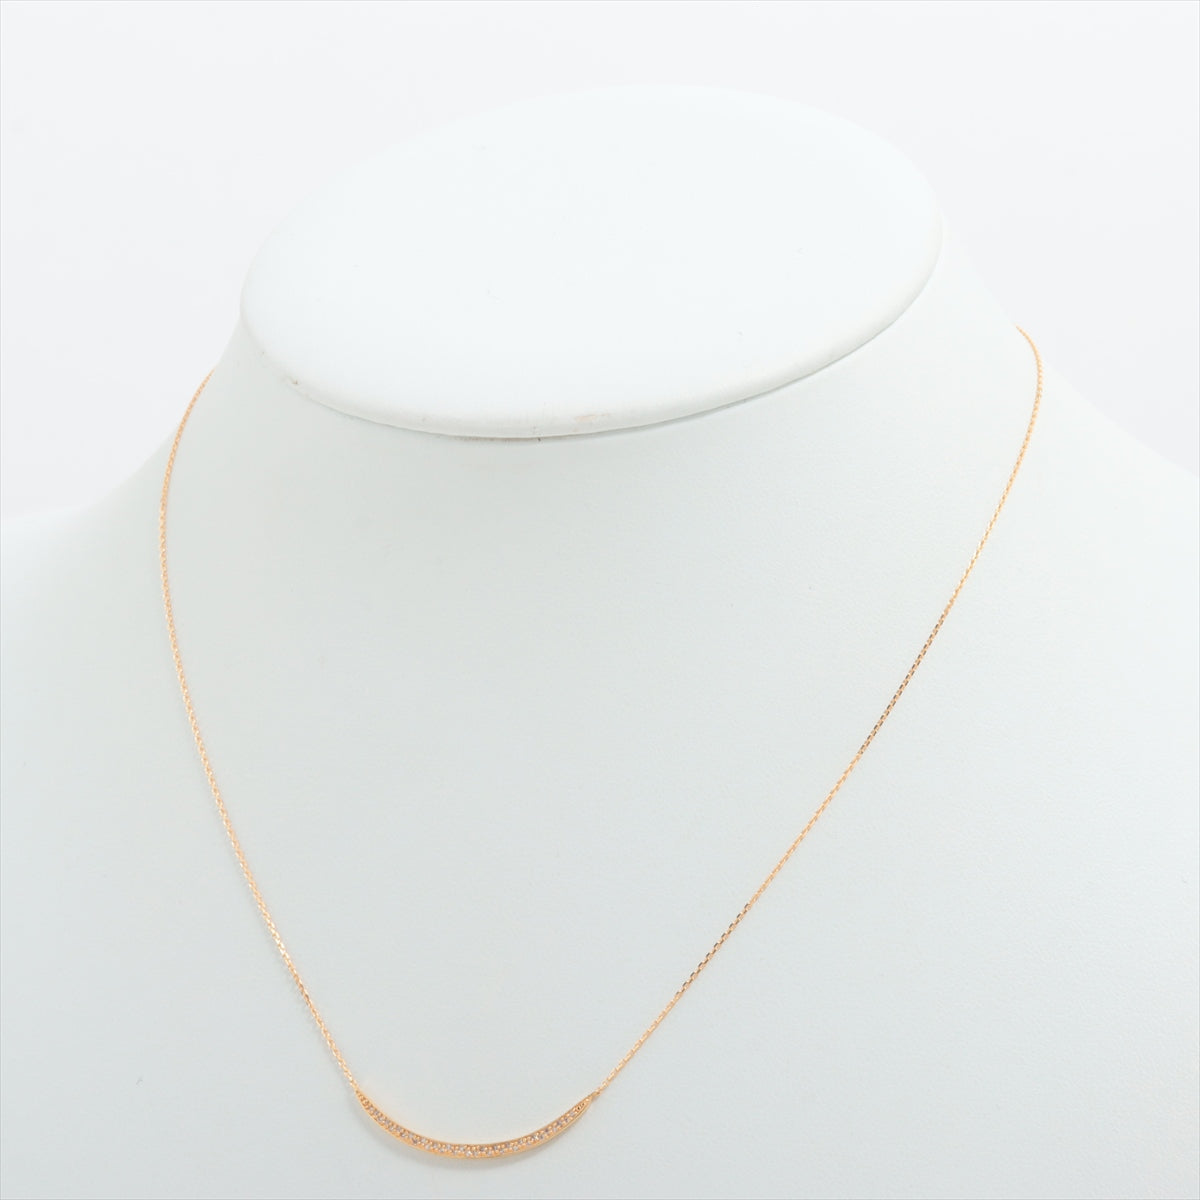 Agat diamond necklace K18 (YG) 1.5g 0.06 E